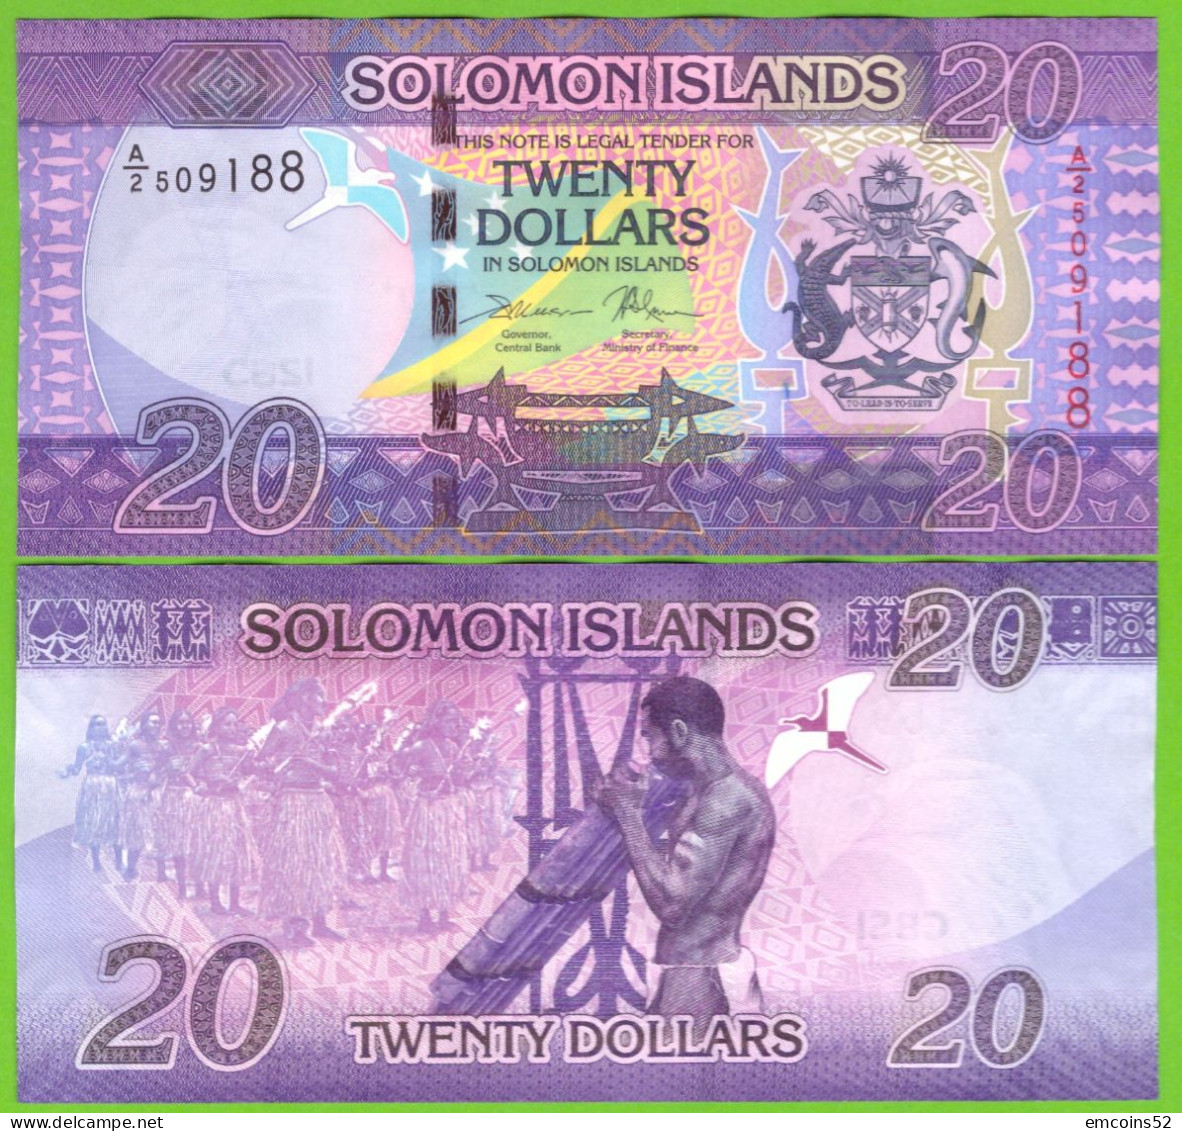 SOLOMON ISLANDS 20 DOLLARS 2017  P-34(1)  UNC - Salomons